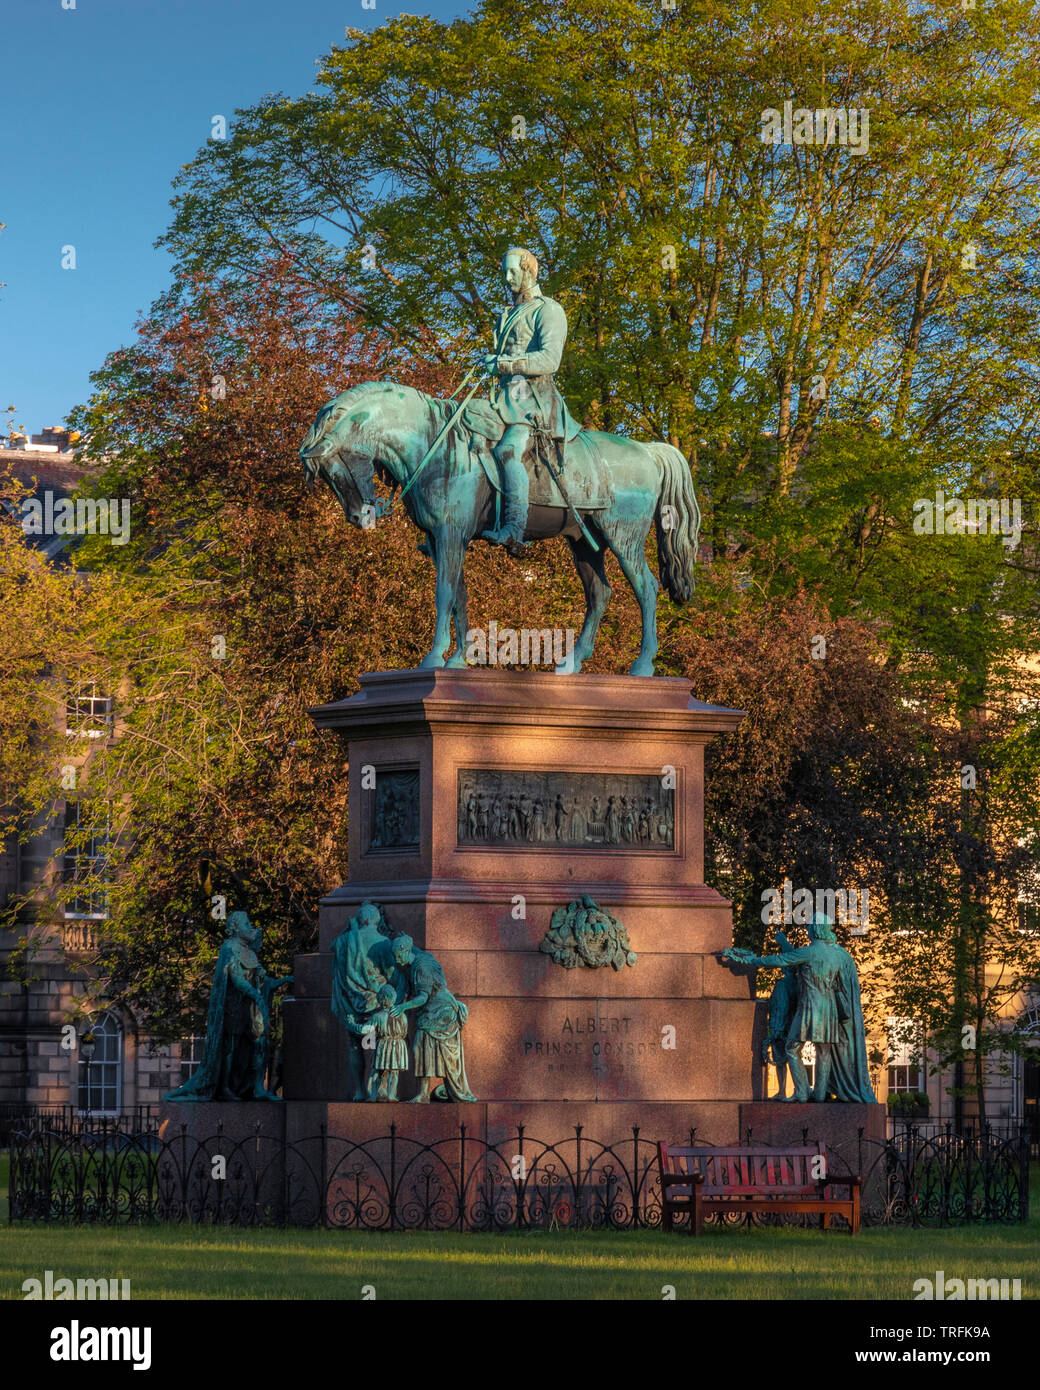 Prince Albert Statue, Charlotte Square, Edinburgh Stockfoto